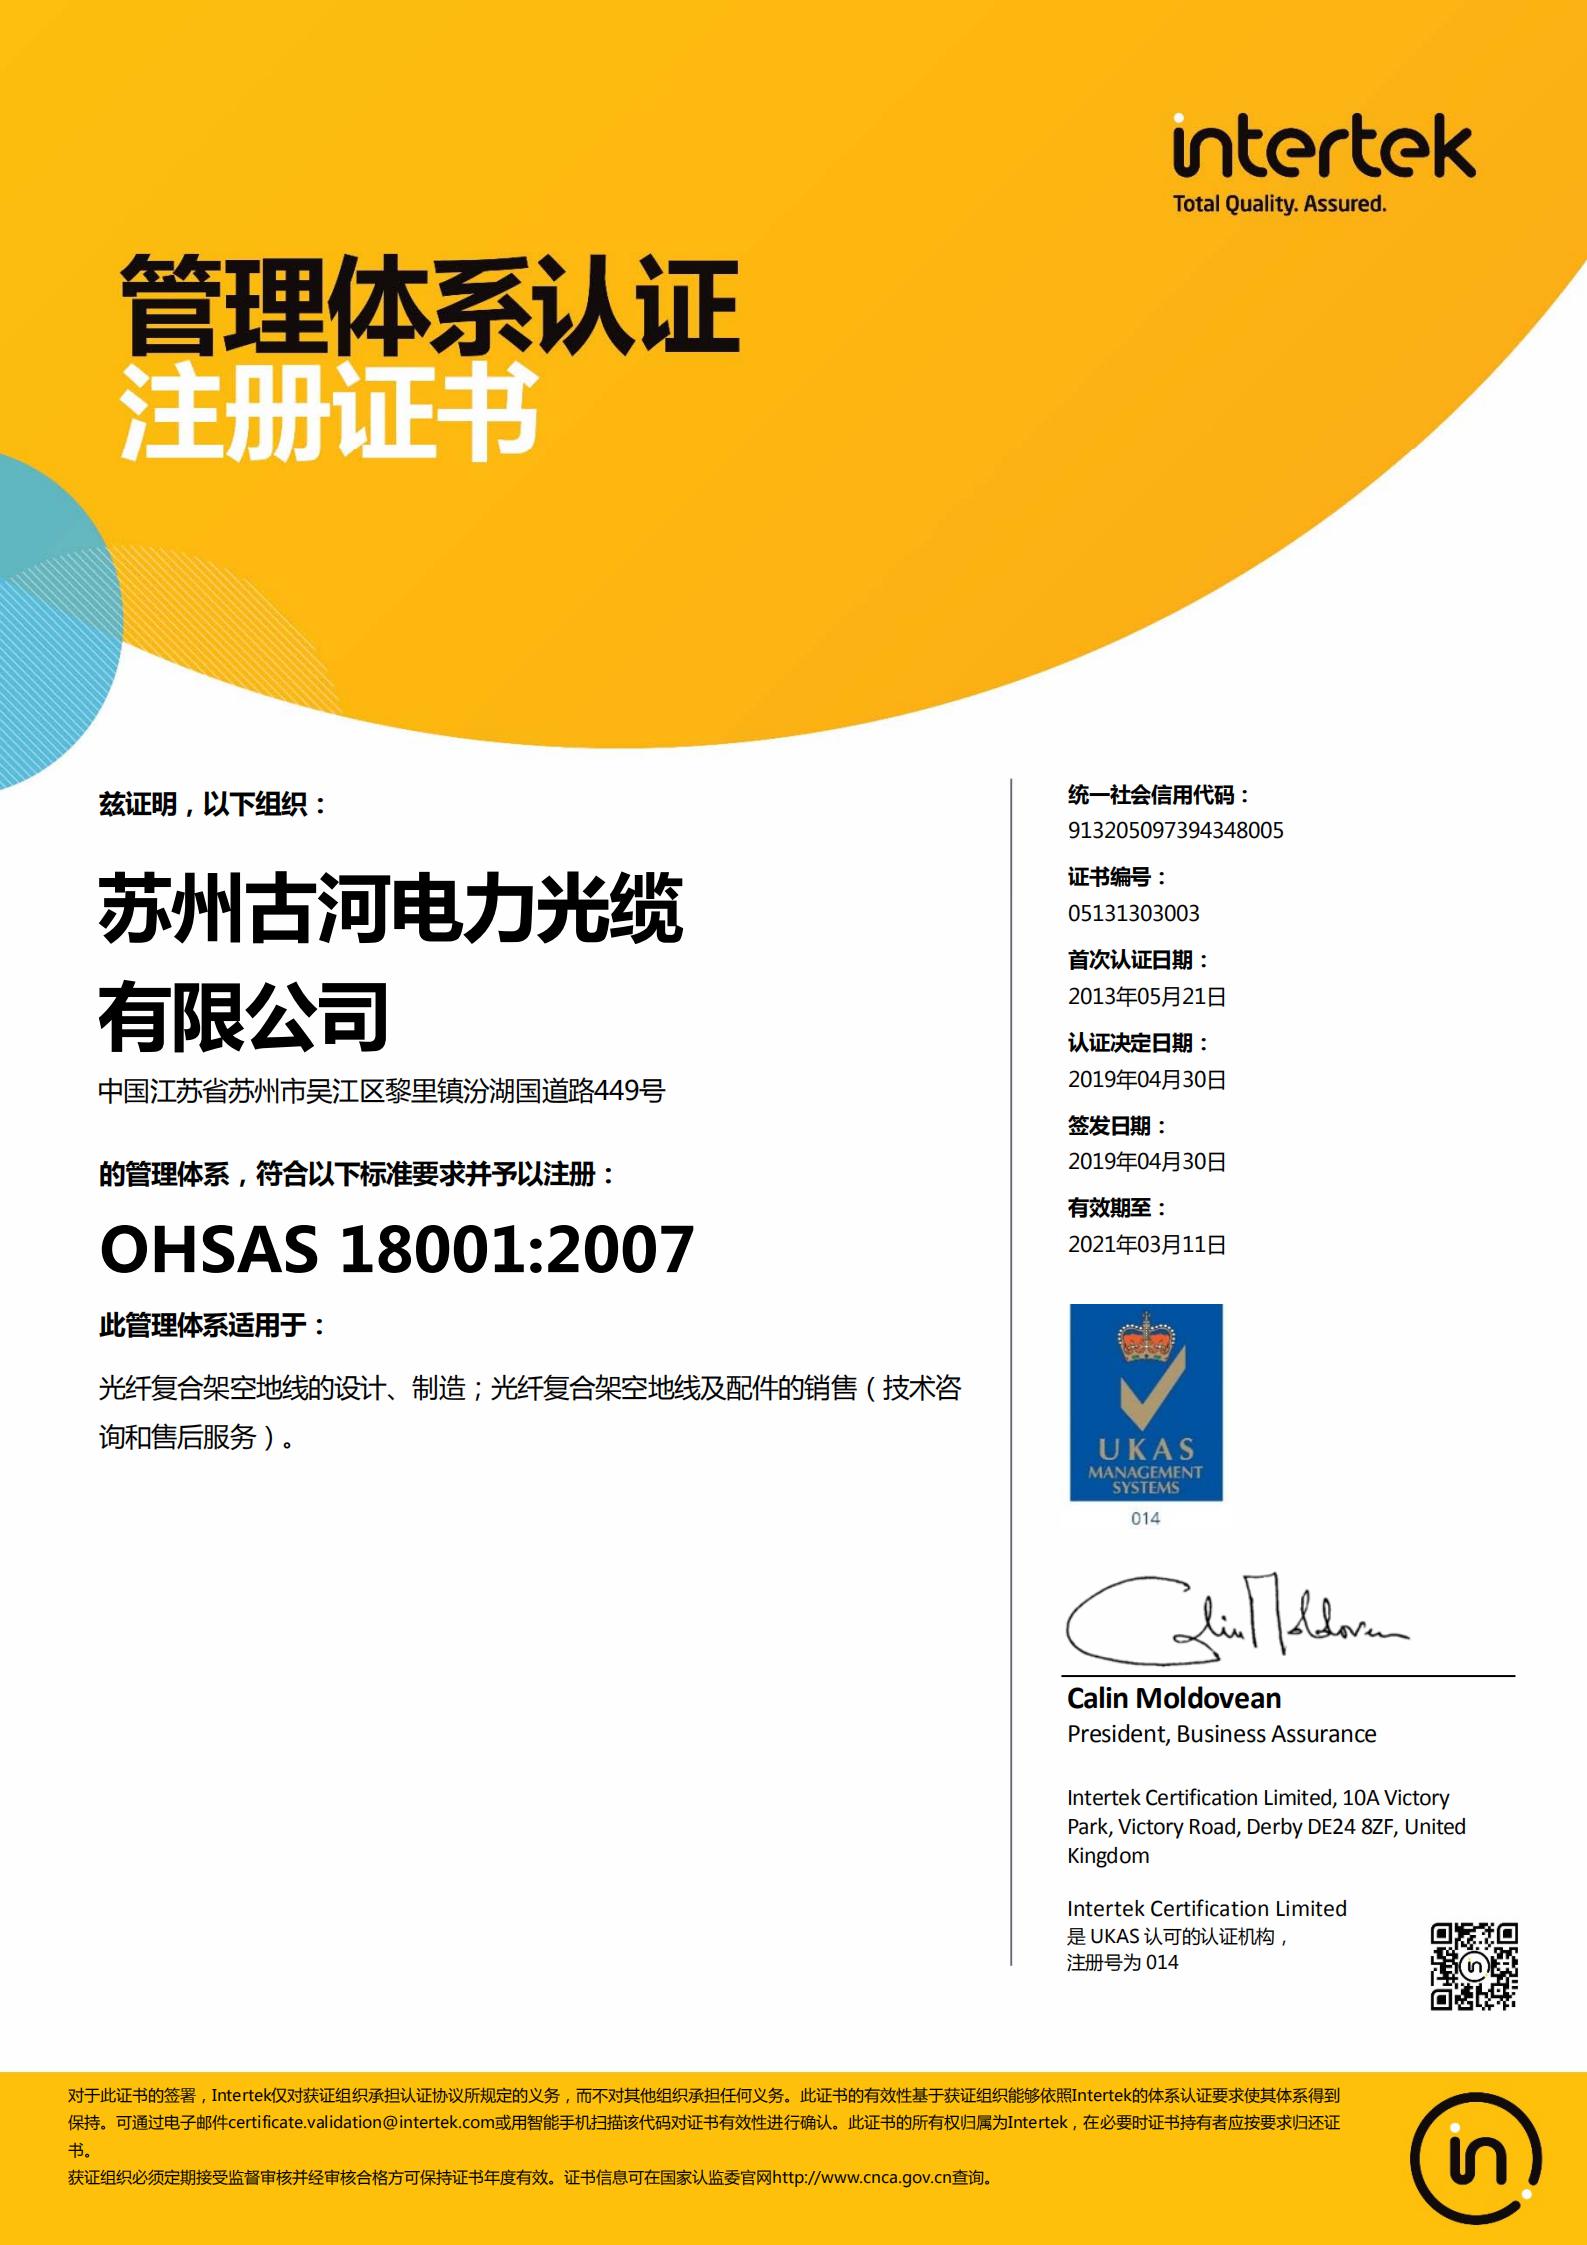 OHSAS 18001 Certificate (2018)